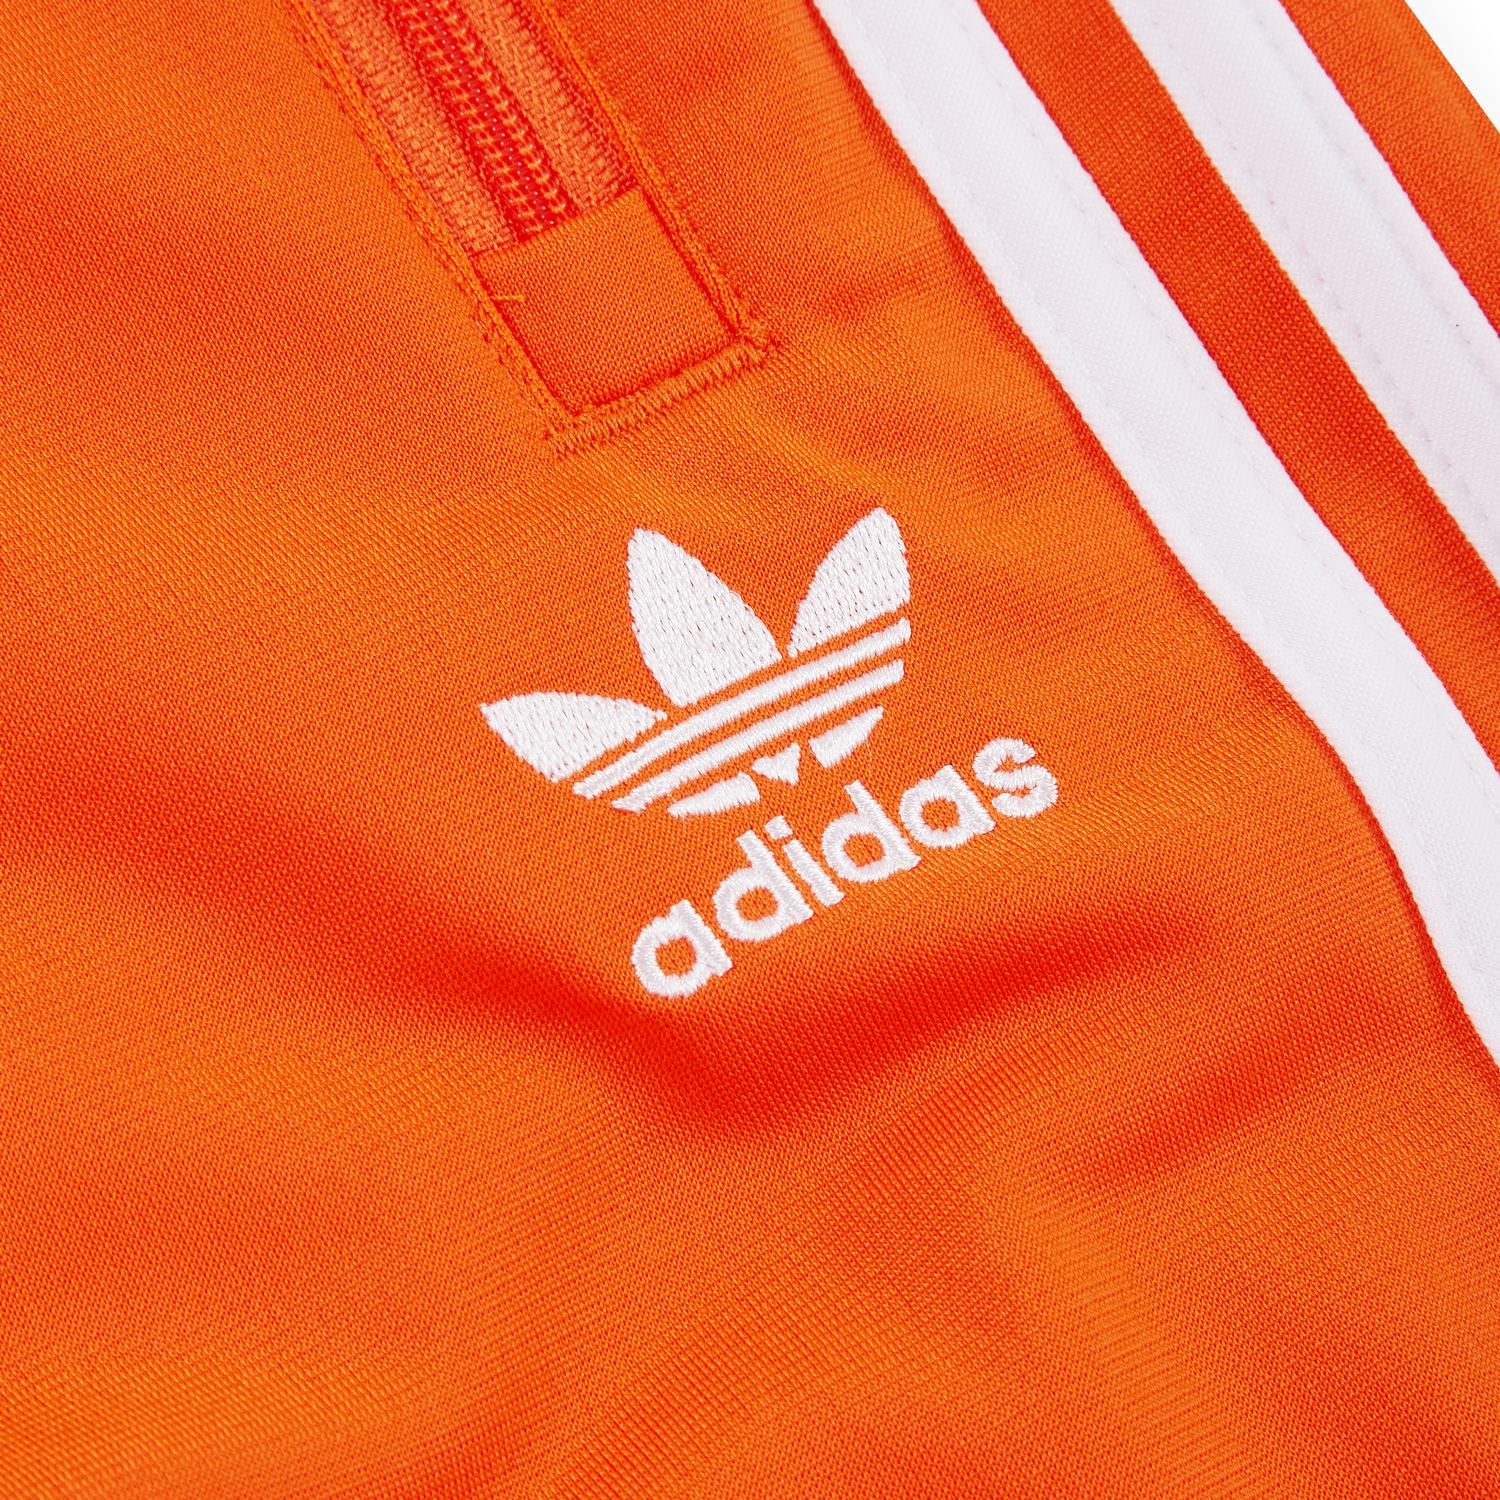 Adidas Orange Striped Track Pants send offers Size  Depop